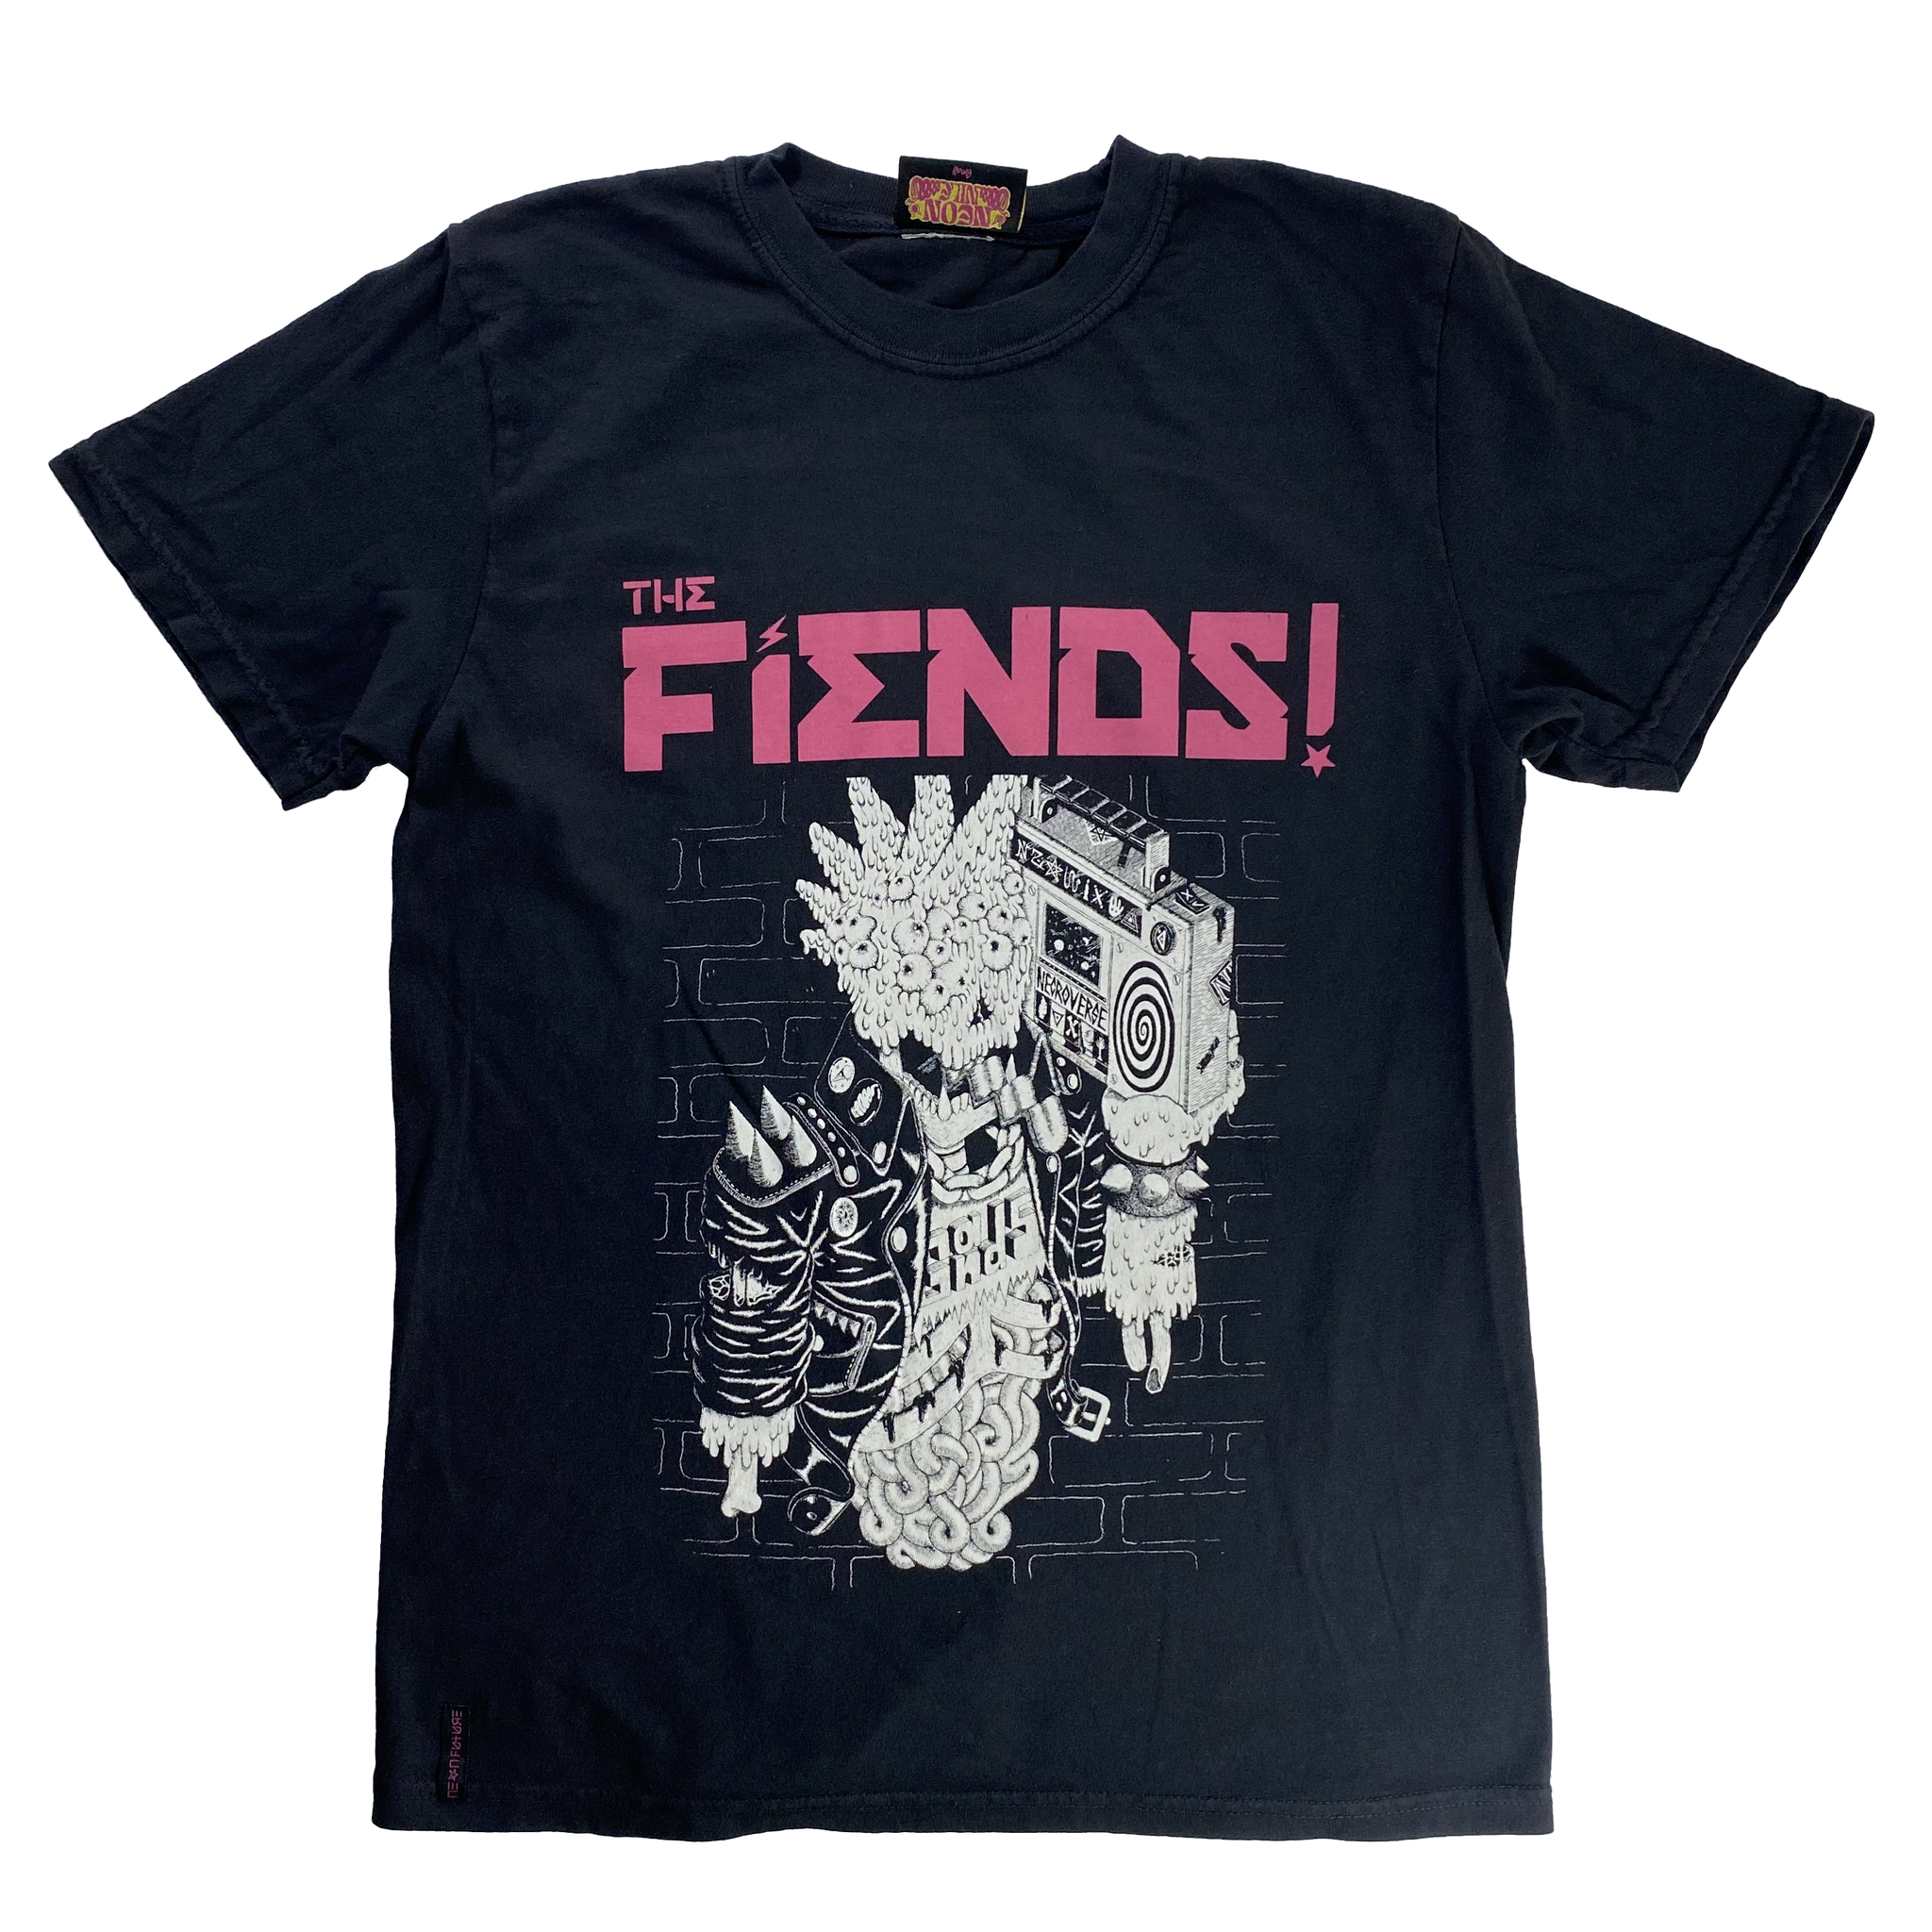 The Fiends! - Criminal Boom Shirt